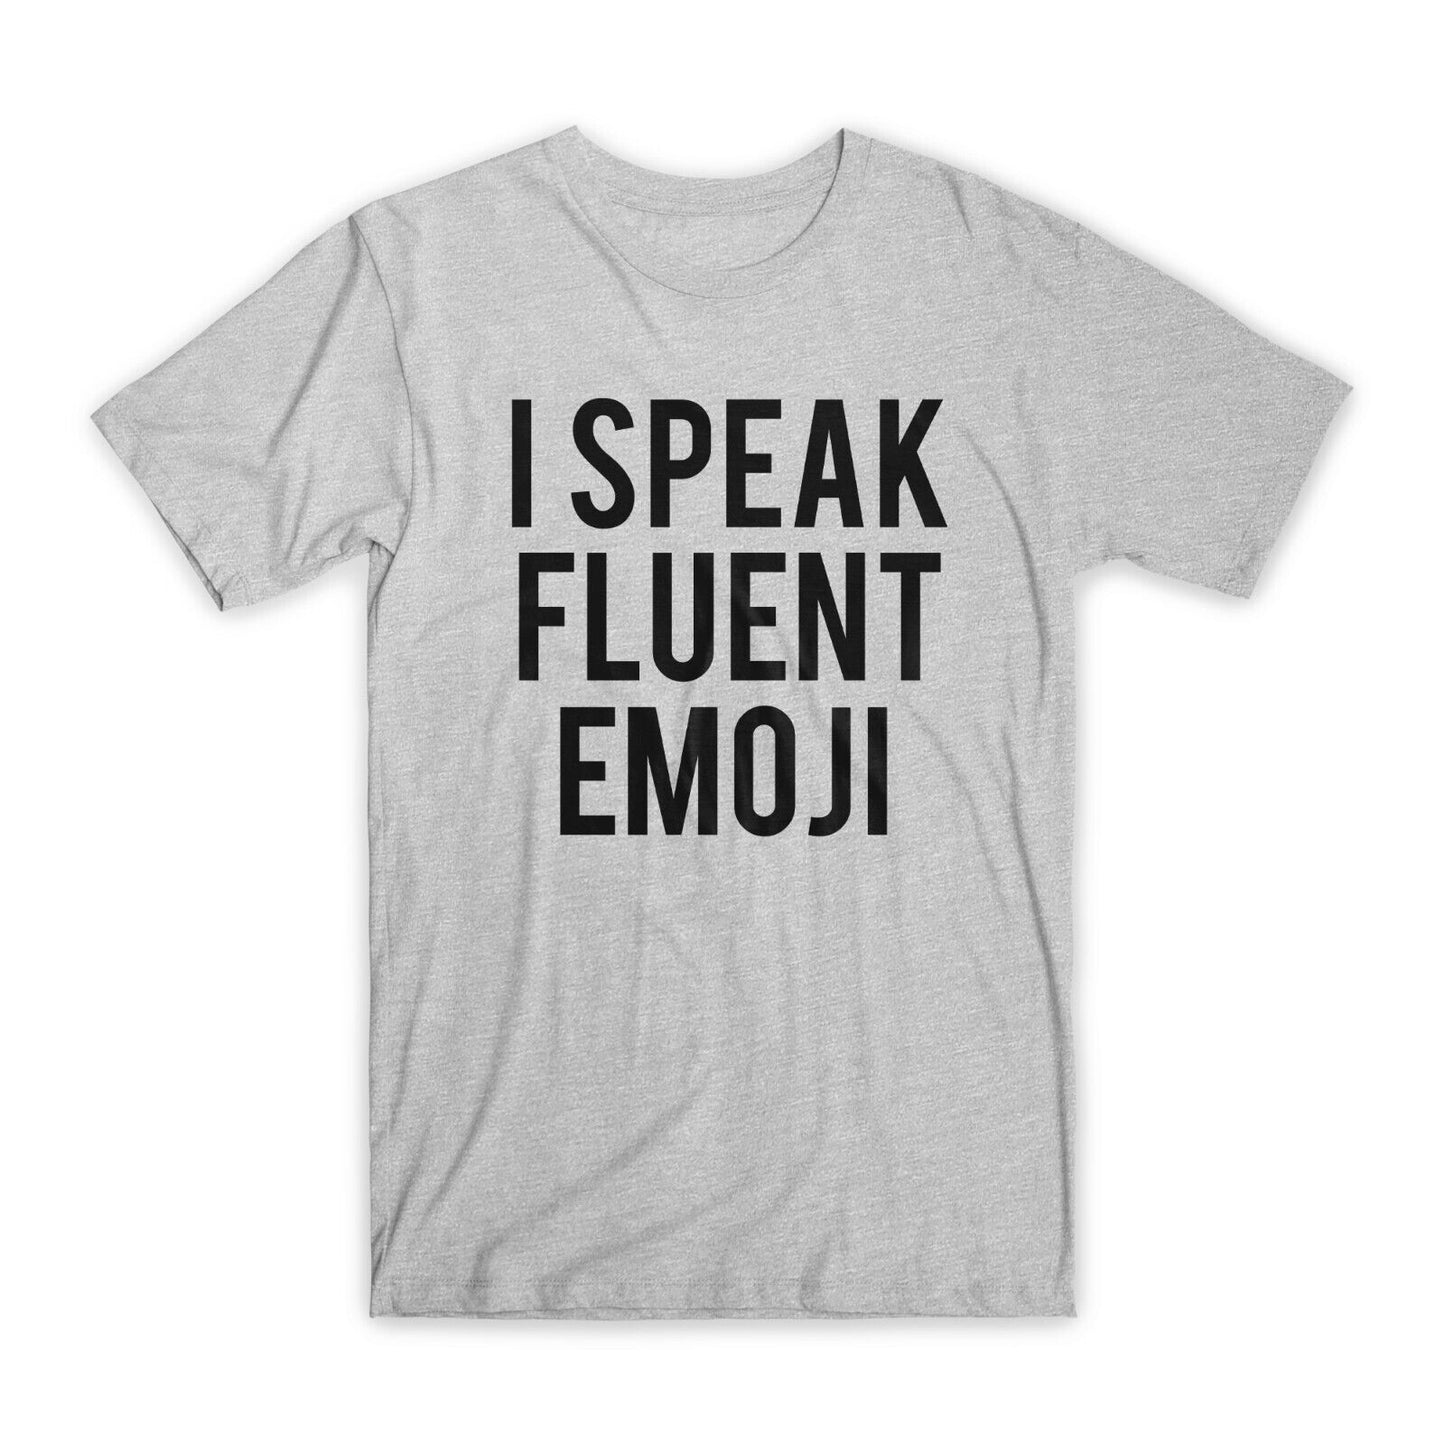 I Speak Fluent Emoji T-Shirt Premium Soft Cotton Crew Neck Funny Tees Gifts NEW